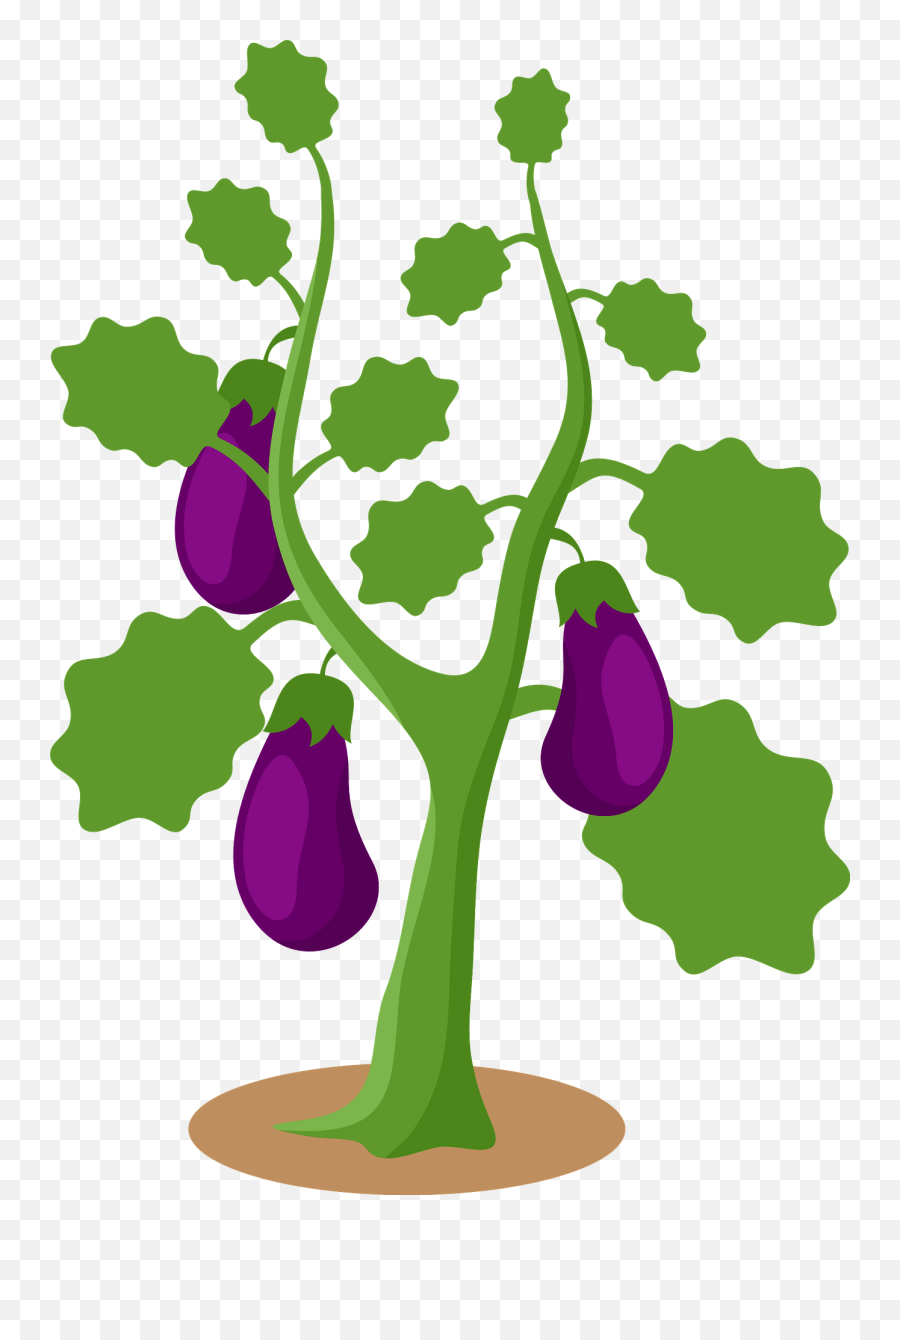 Eggplant - Eggplant In Garden Clipart Emoji,Eggplant Clipart